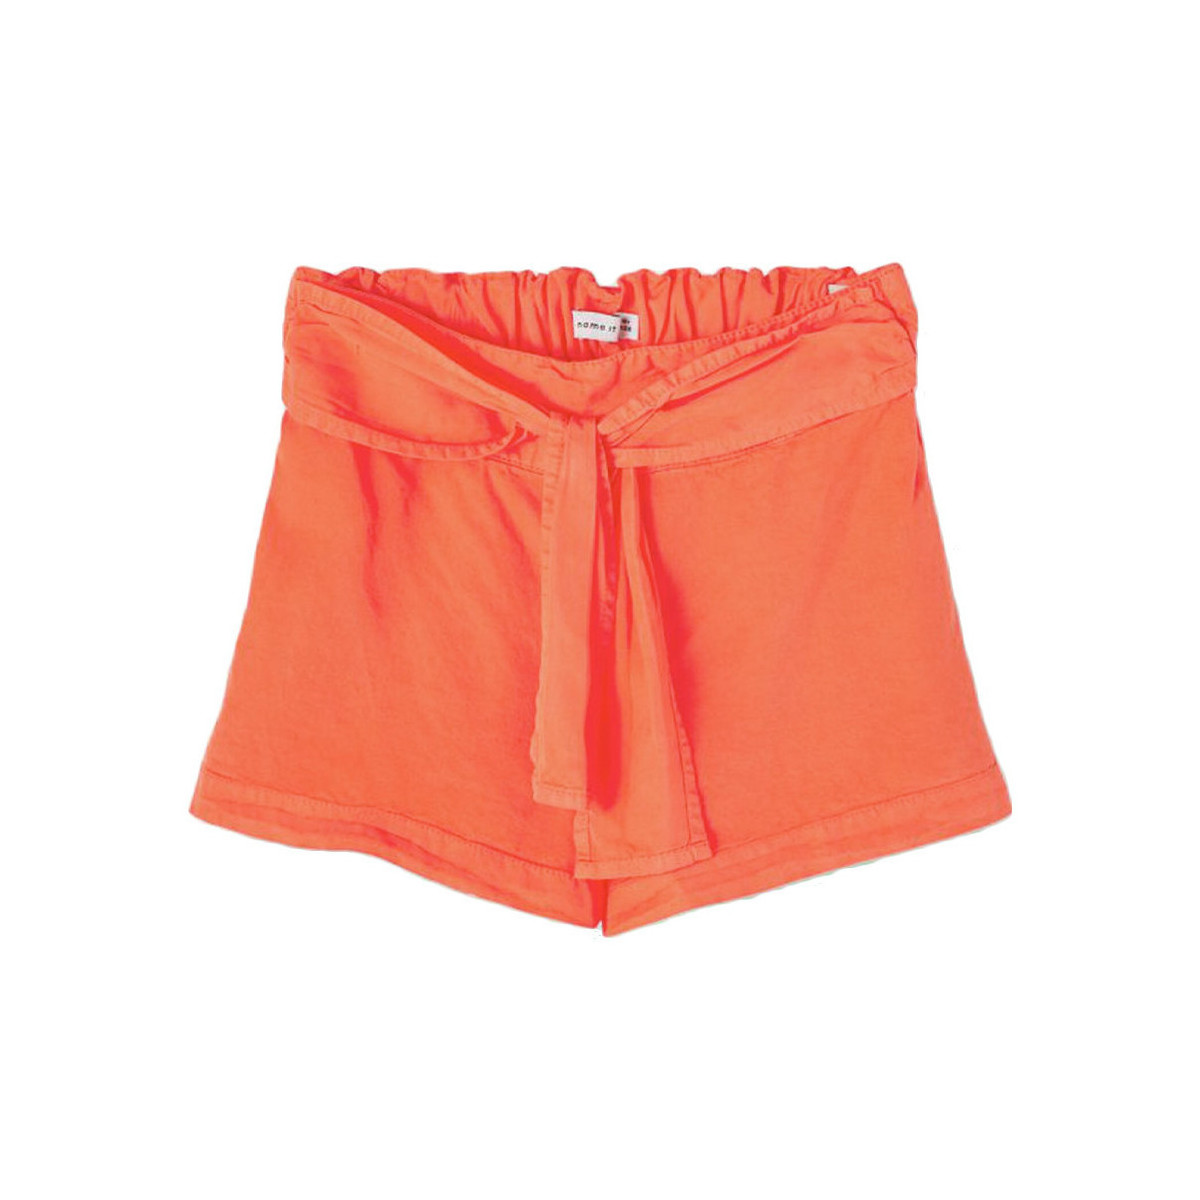 Vêtements Fille Shorts / Bermudas Name it 13190315 Orange